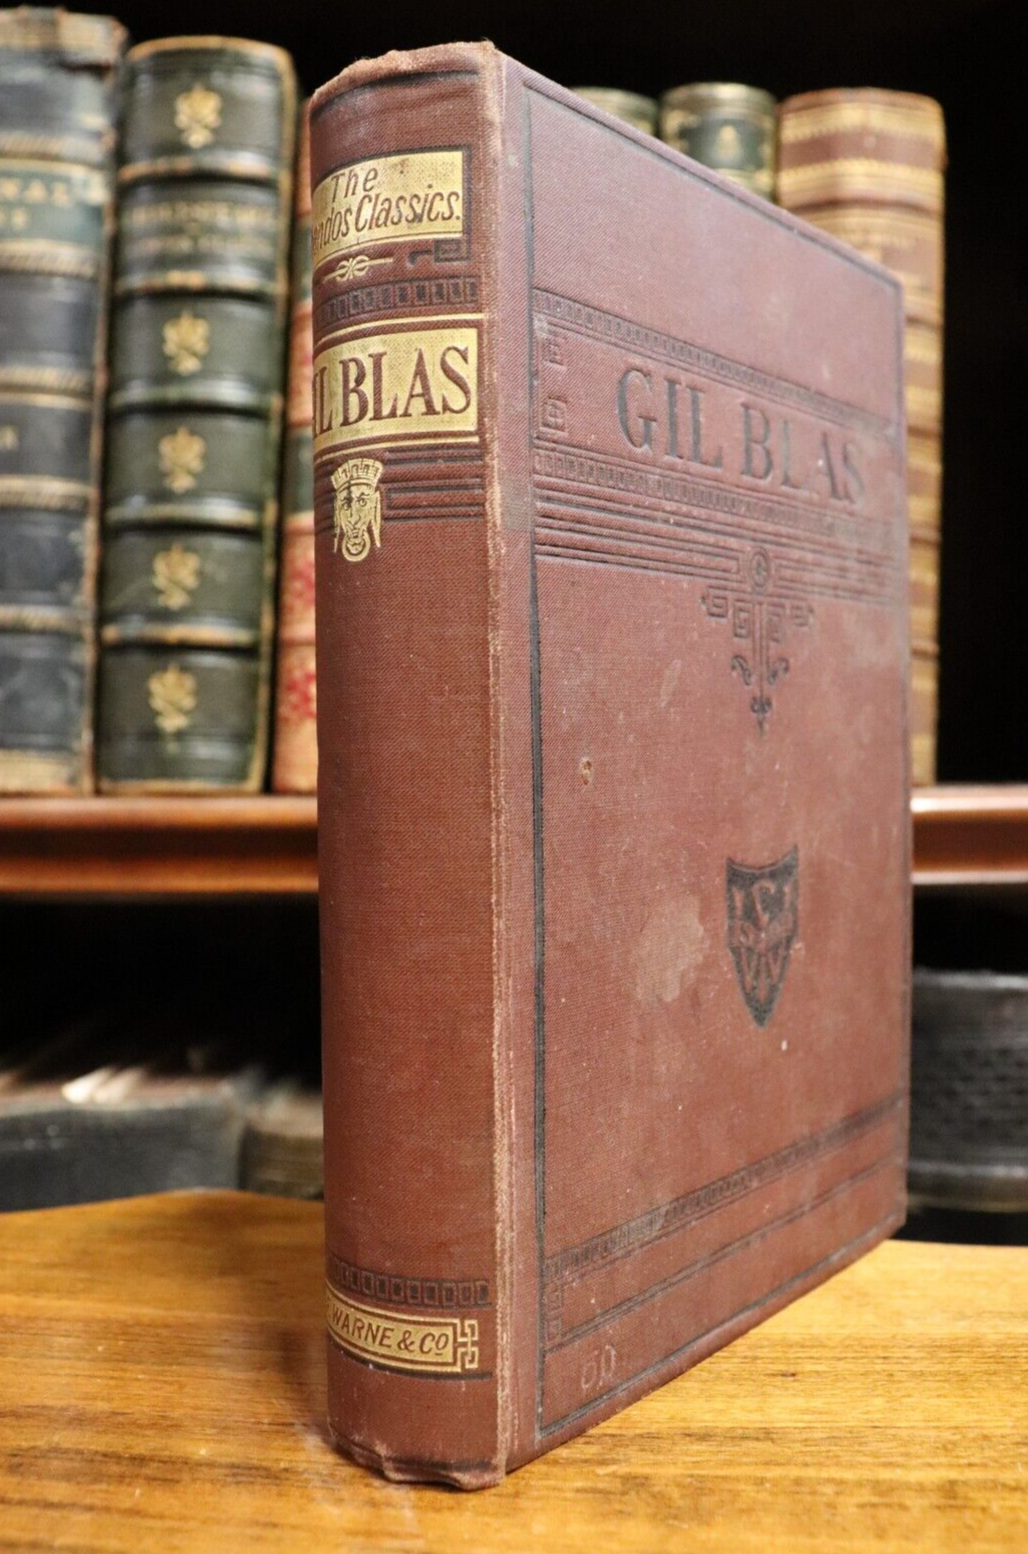 Adventures Of Gil Blas Of Santillane - c1900 - Antique Literature Fiction Book